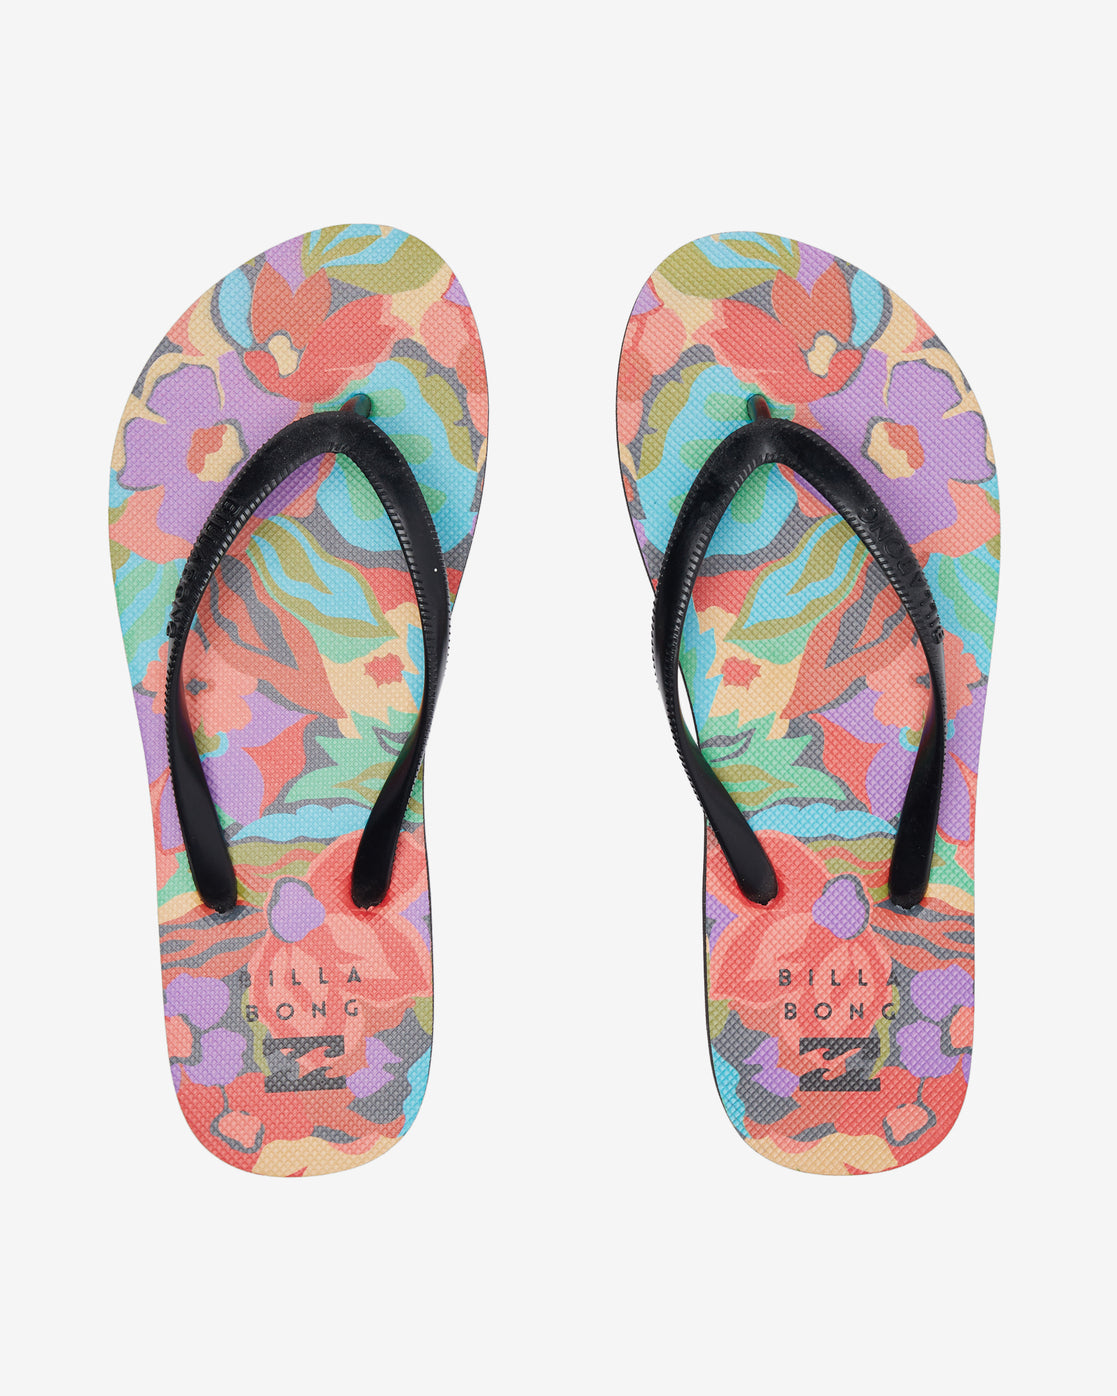 Dama Rubber Flip Flop Sandals - Bright Orchid